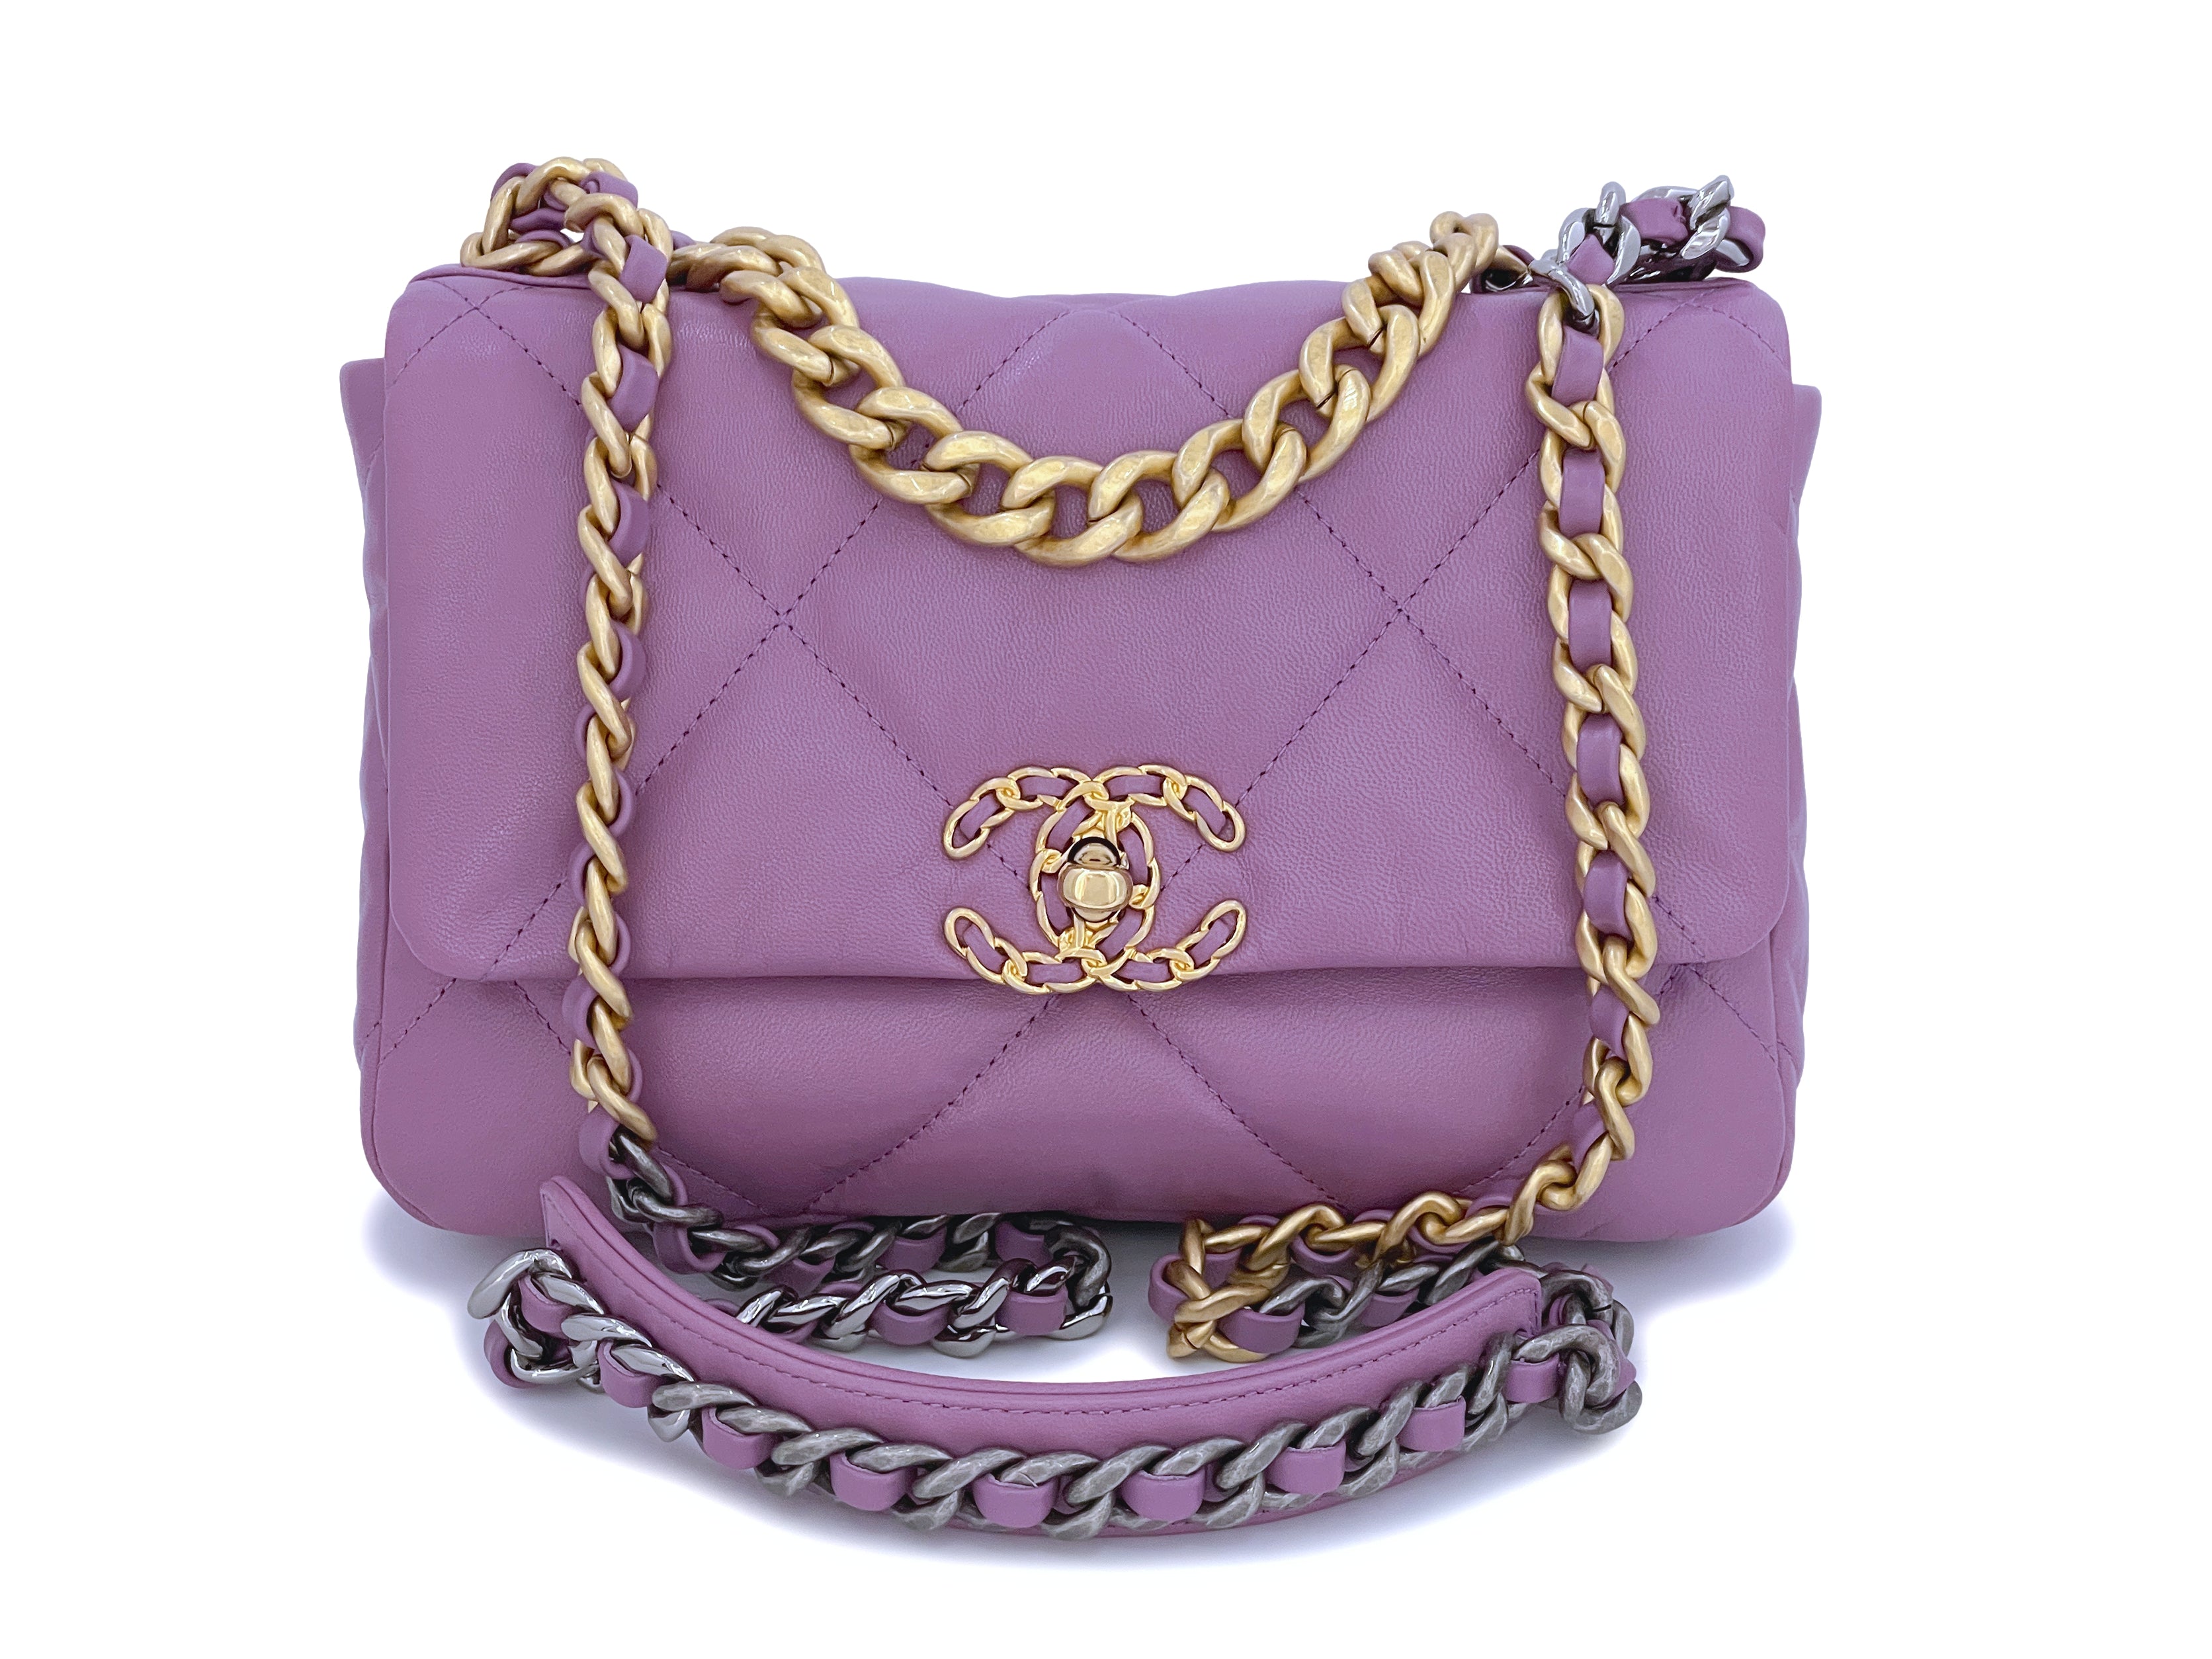 Chanel 19 purple bag AS1160 26cm for Sale in Sanford, FL - OfferUp